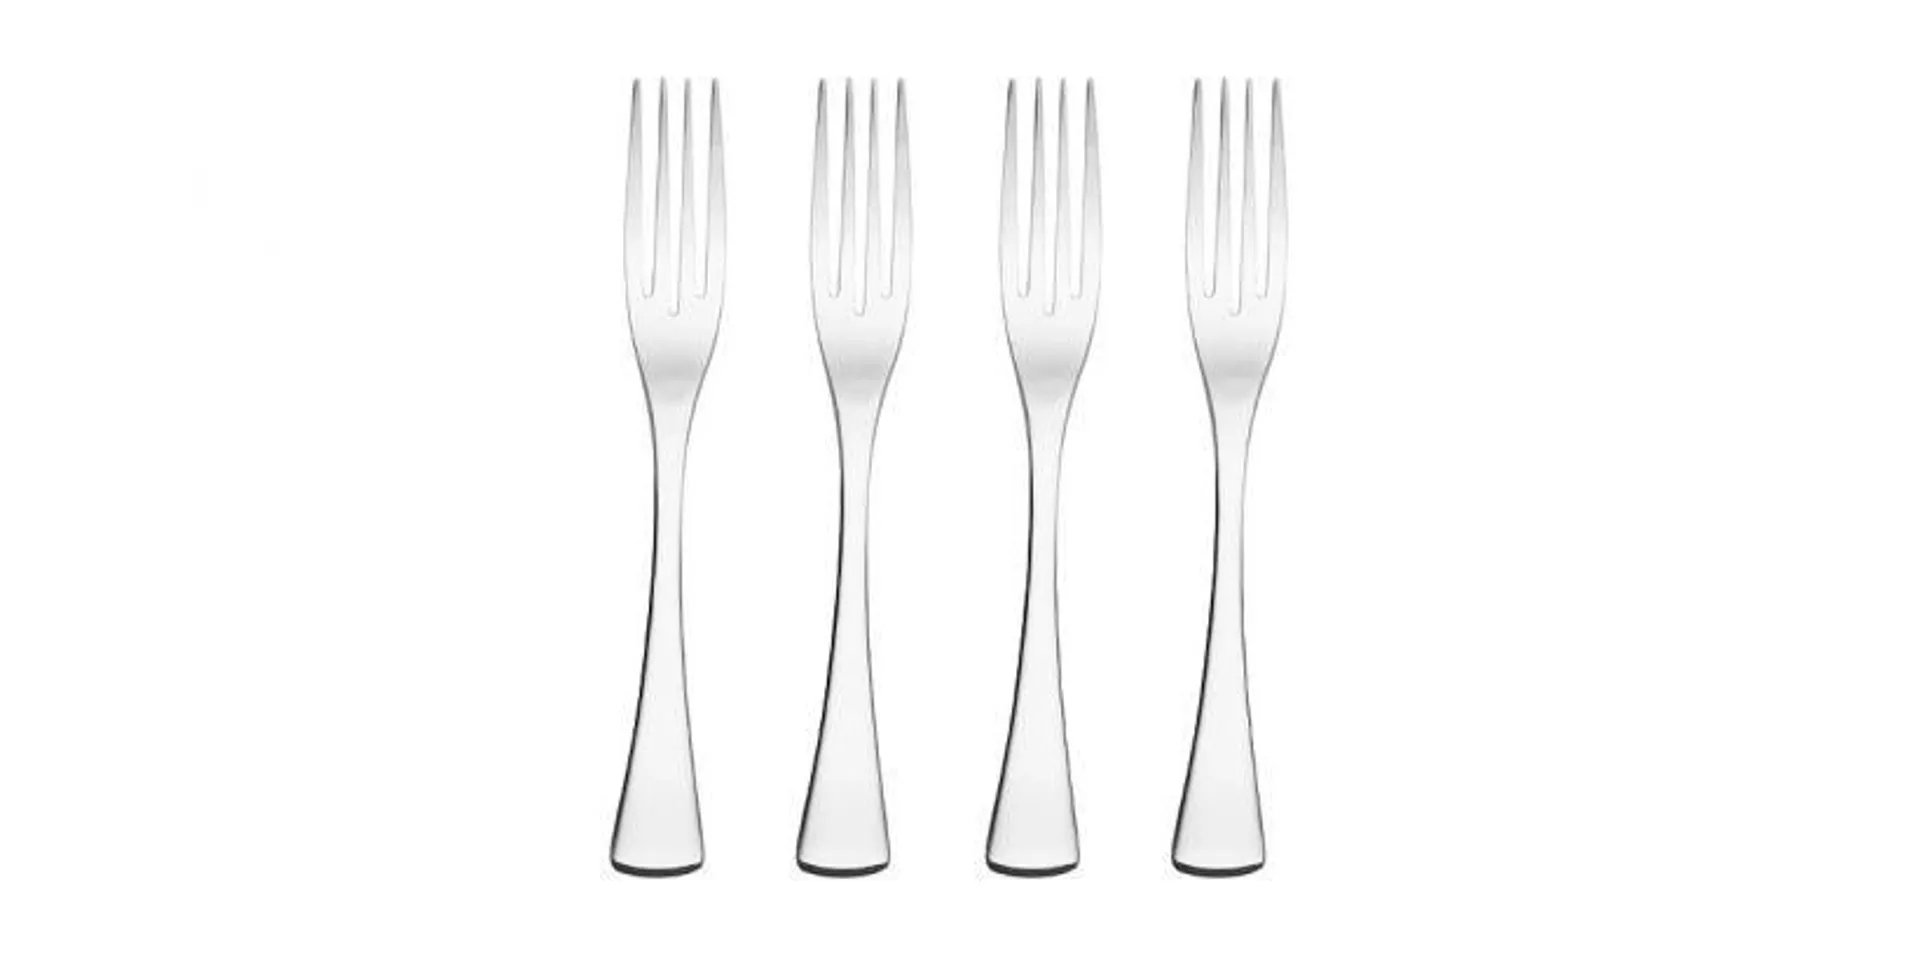 Forma Silverware - Set of 4 Forks